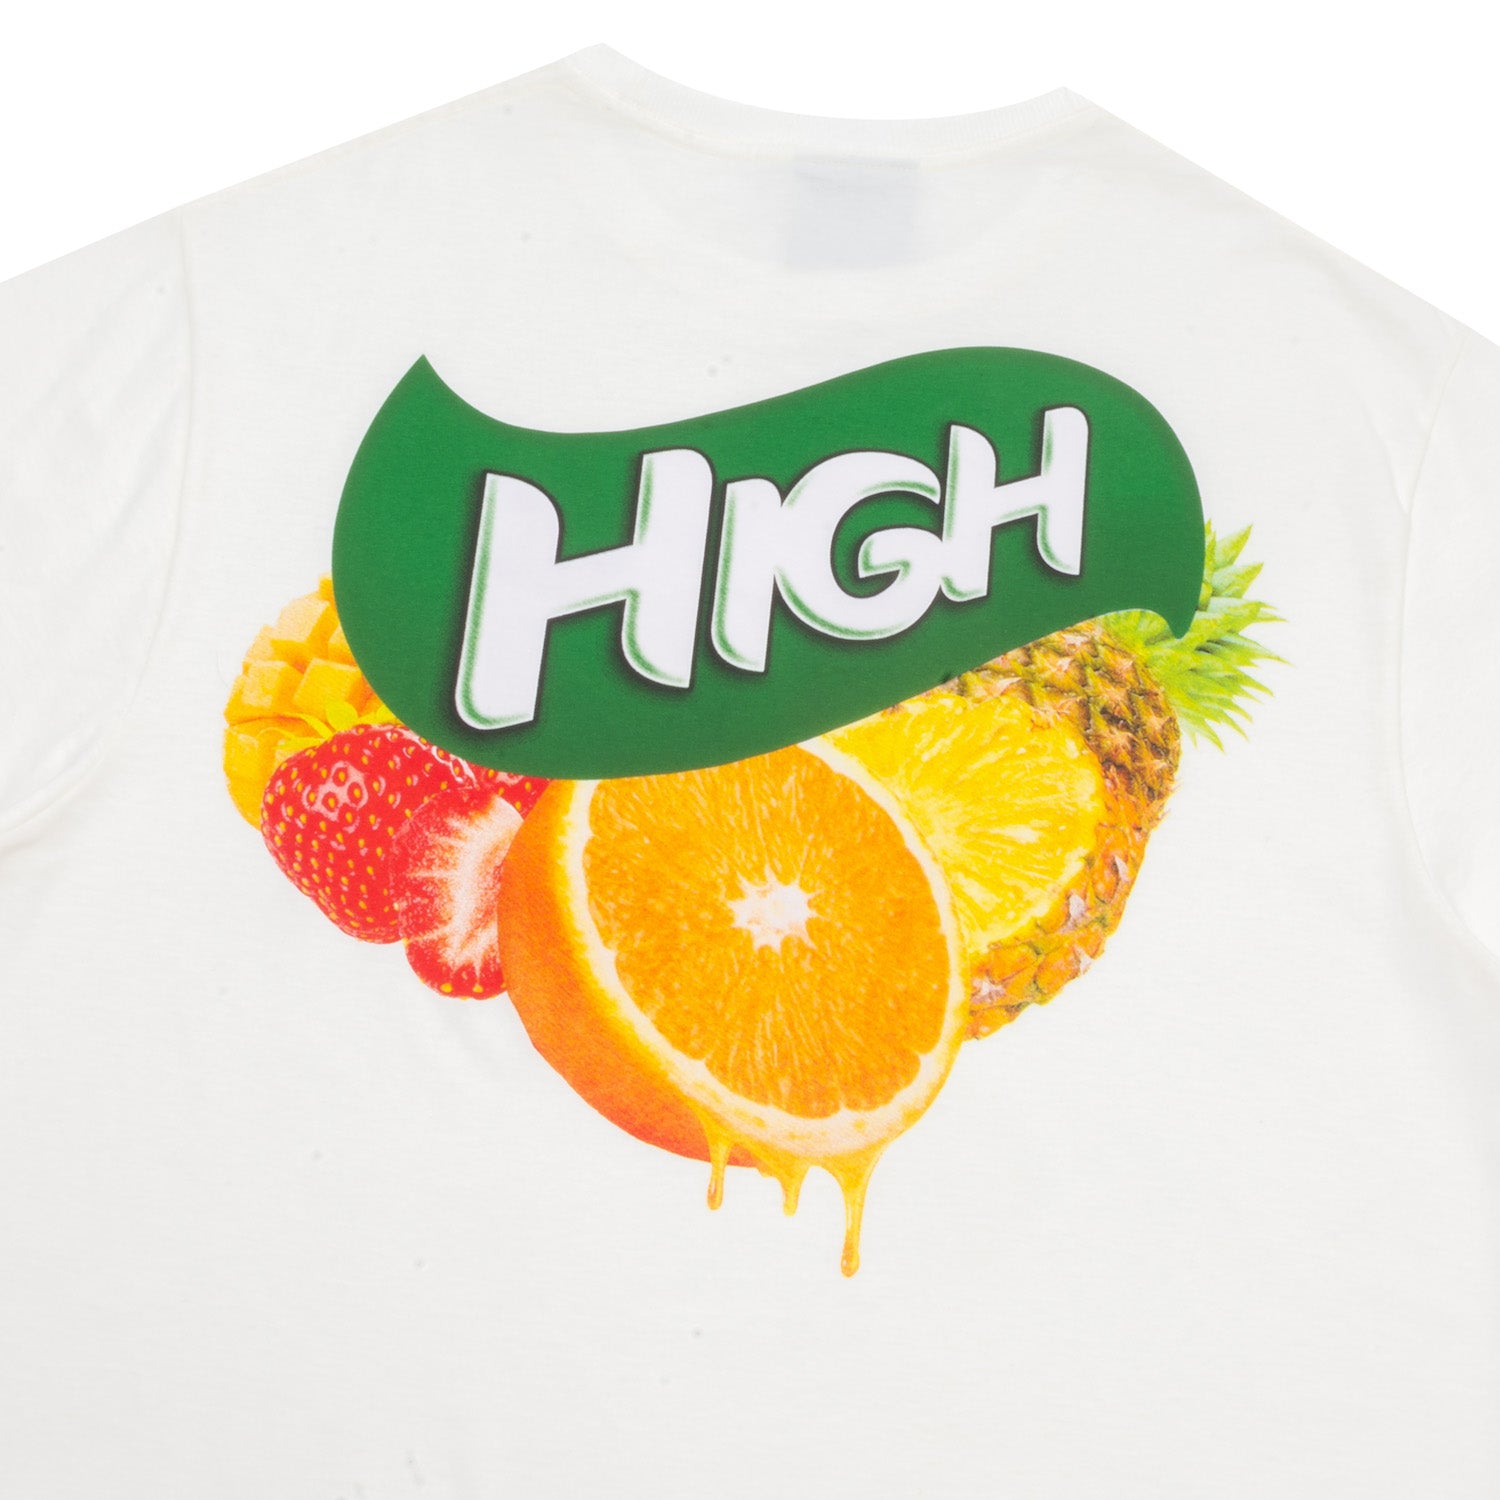 HIGH - Tee Juicy T-Shirt (White) C-Vida Skate Shop